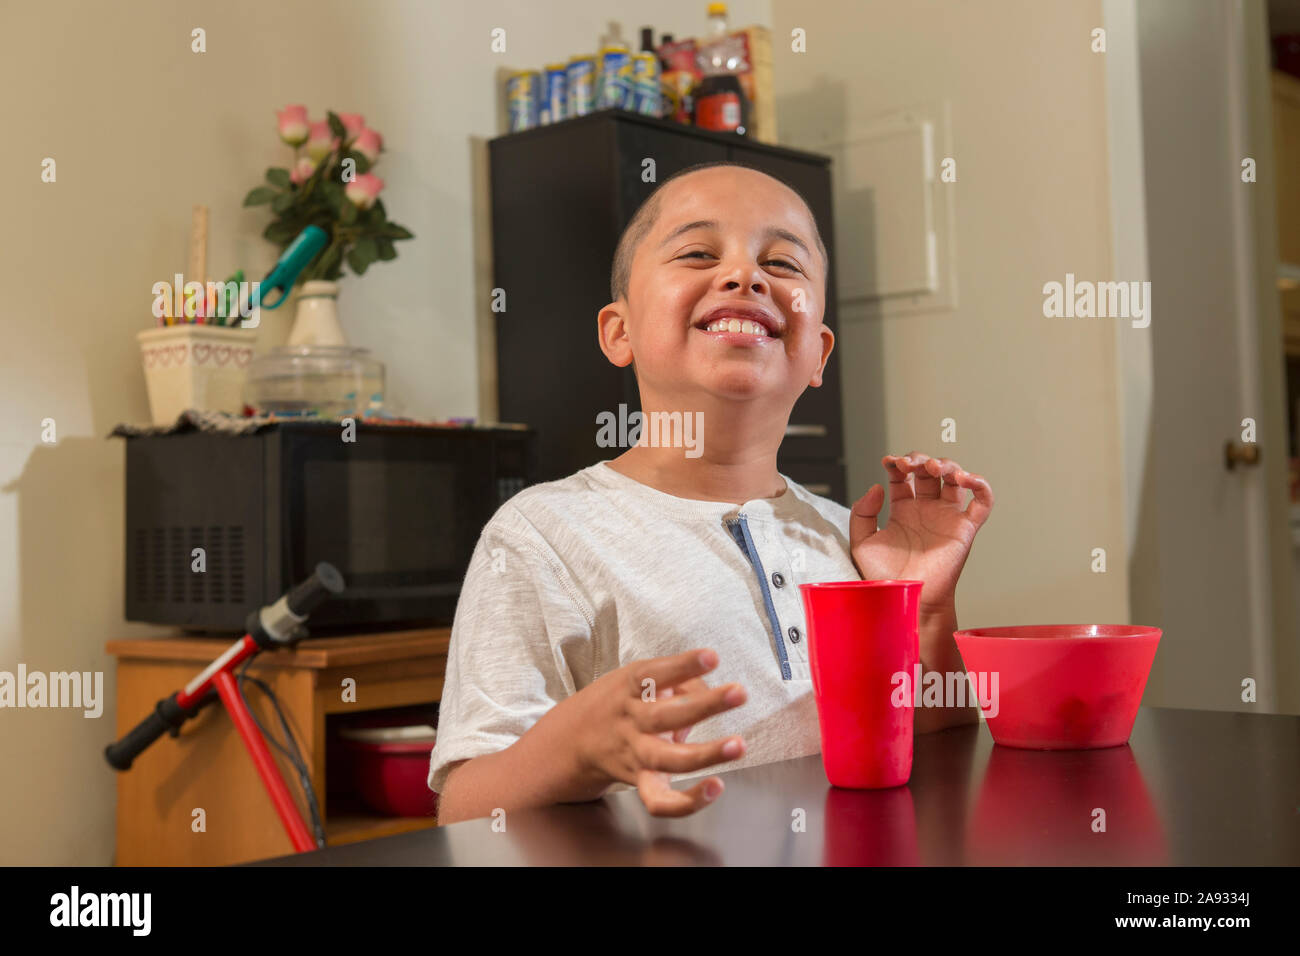 Happy Hispanic boy with Autism eating in his kitchen Stock Photo